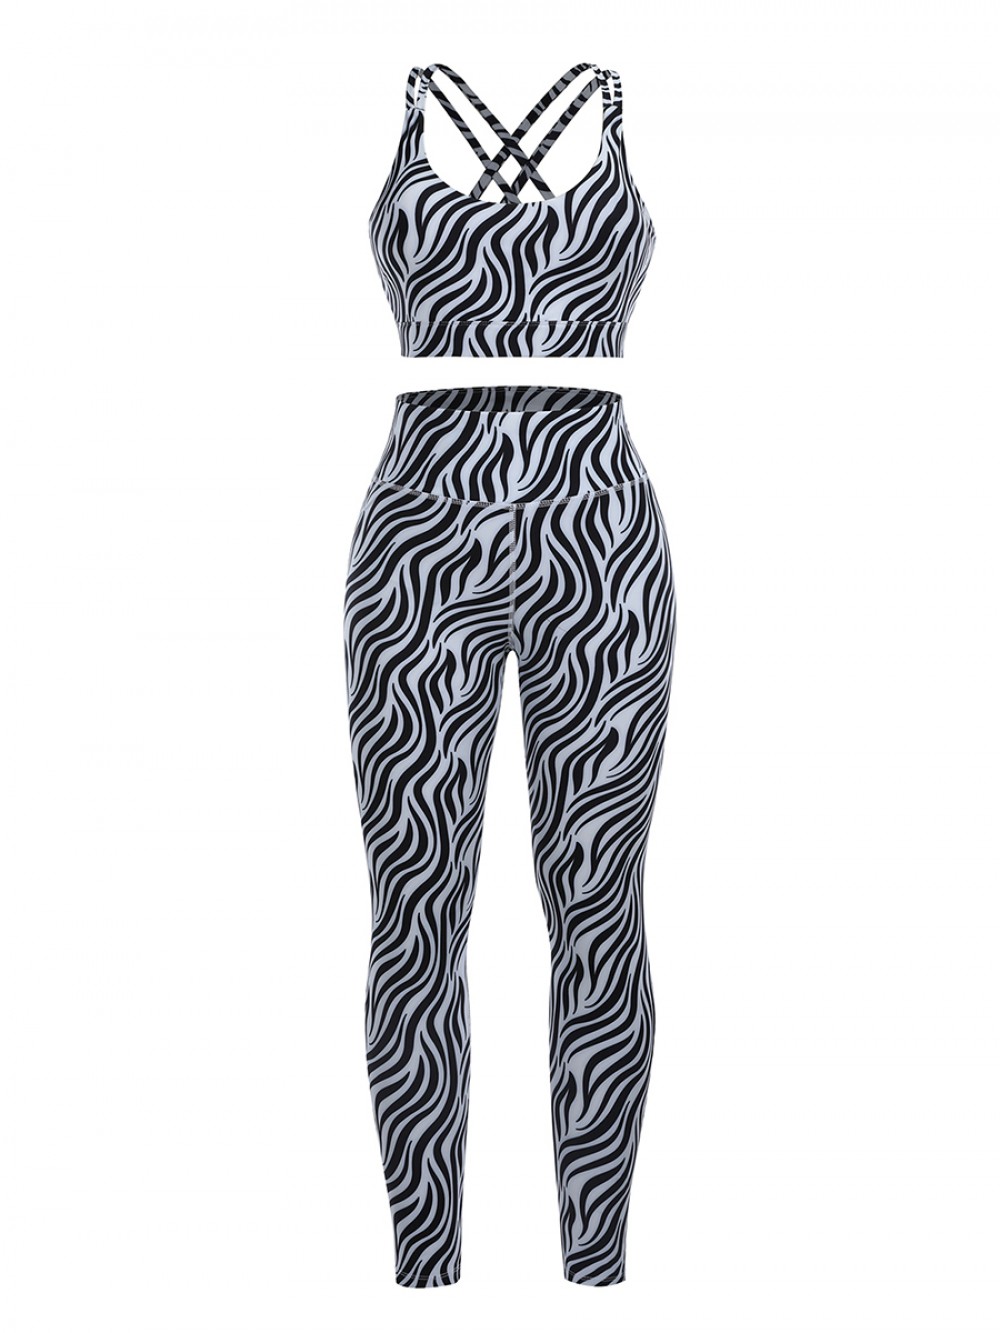 Zebra Print Black Yoga Outfit High Waist Strap For Training